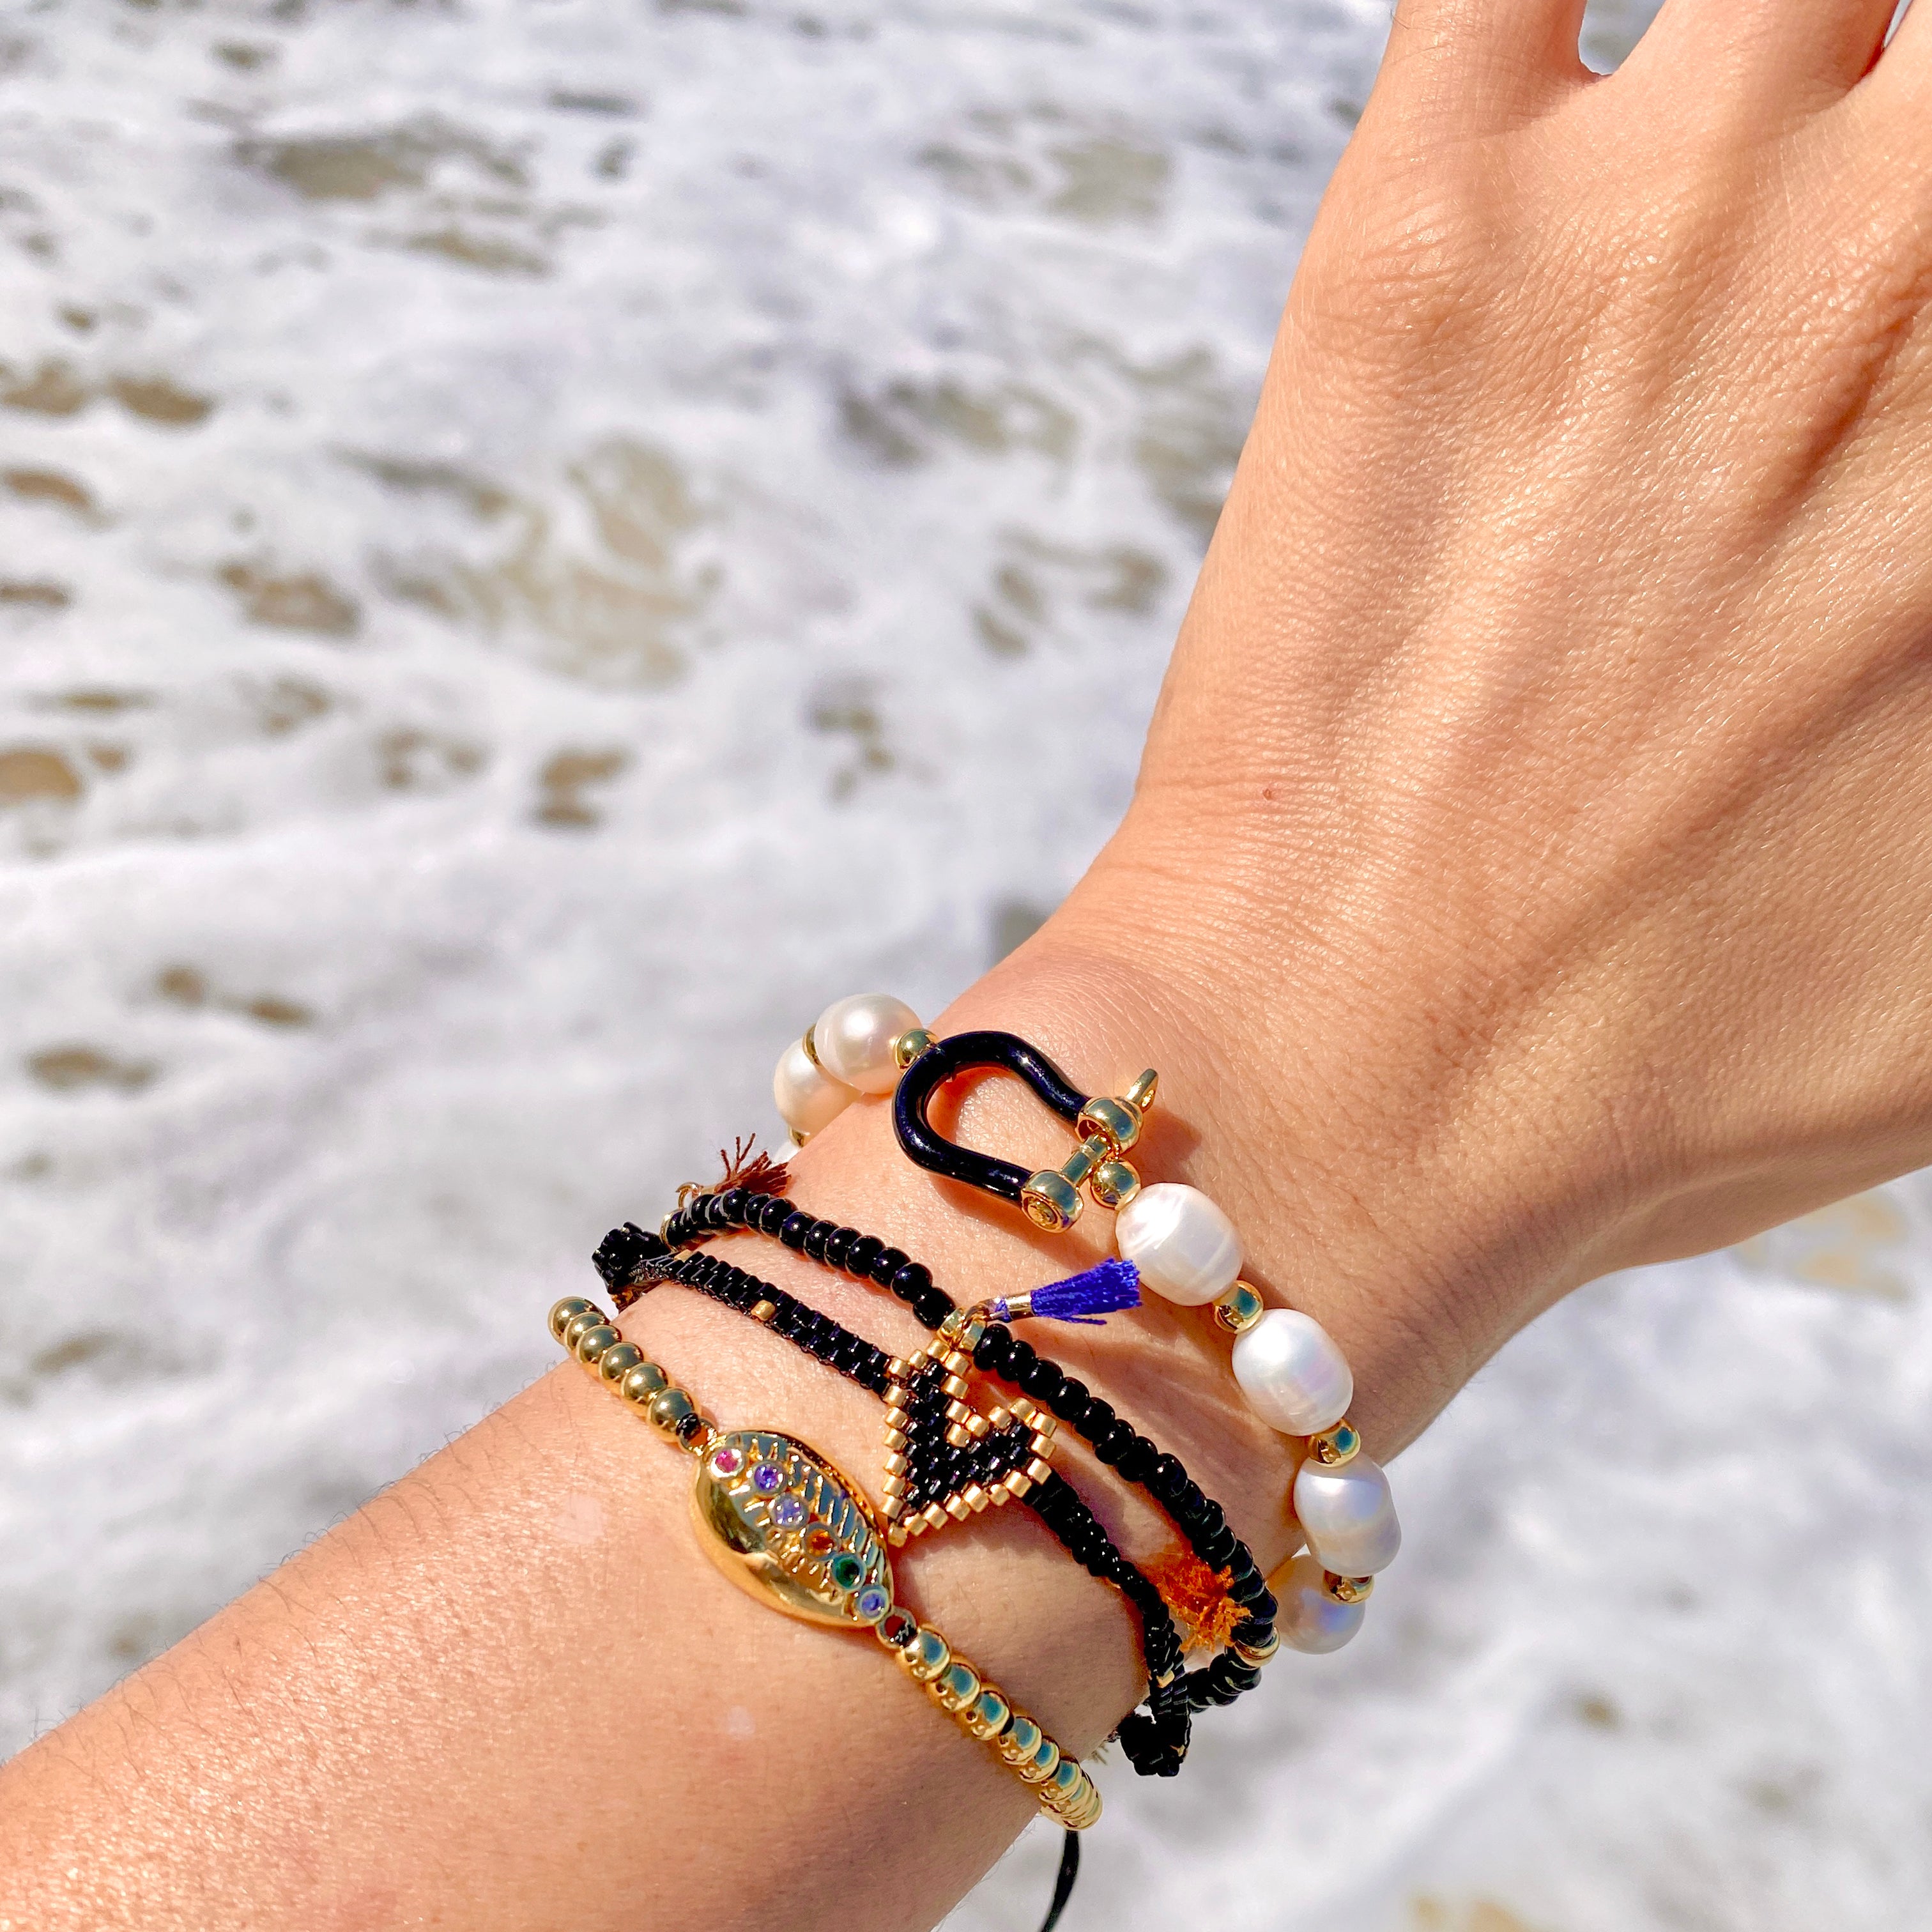 DIY Shell Bracelet for Summer - Otherwise Amazing